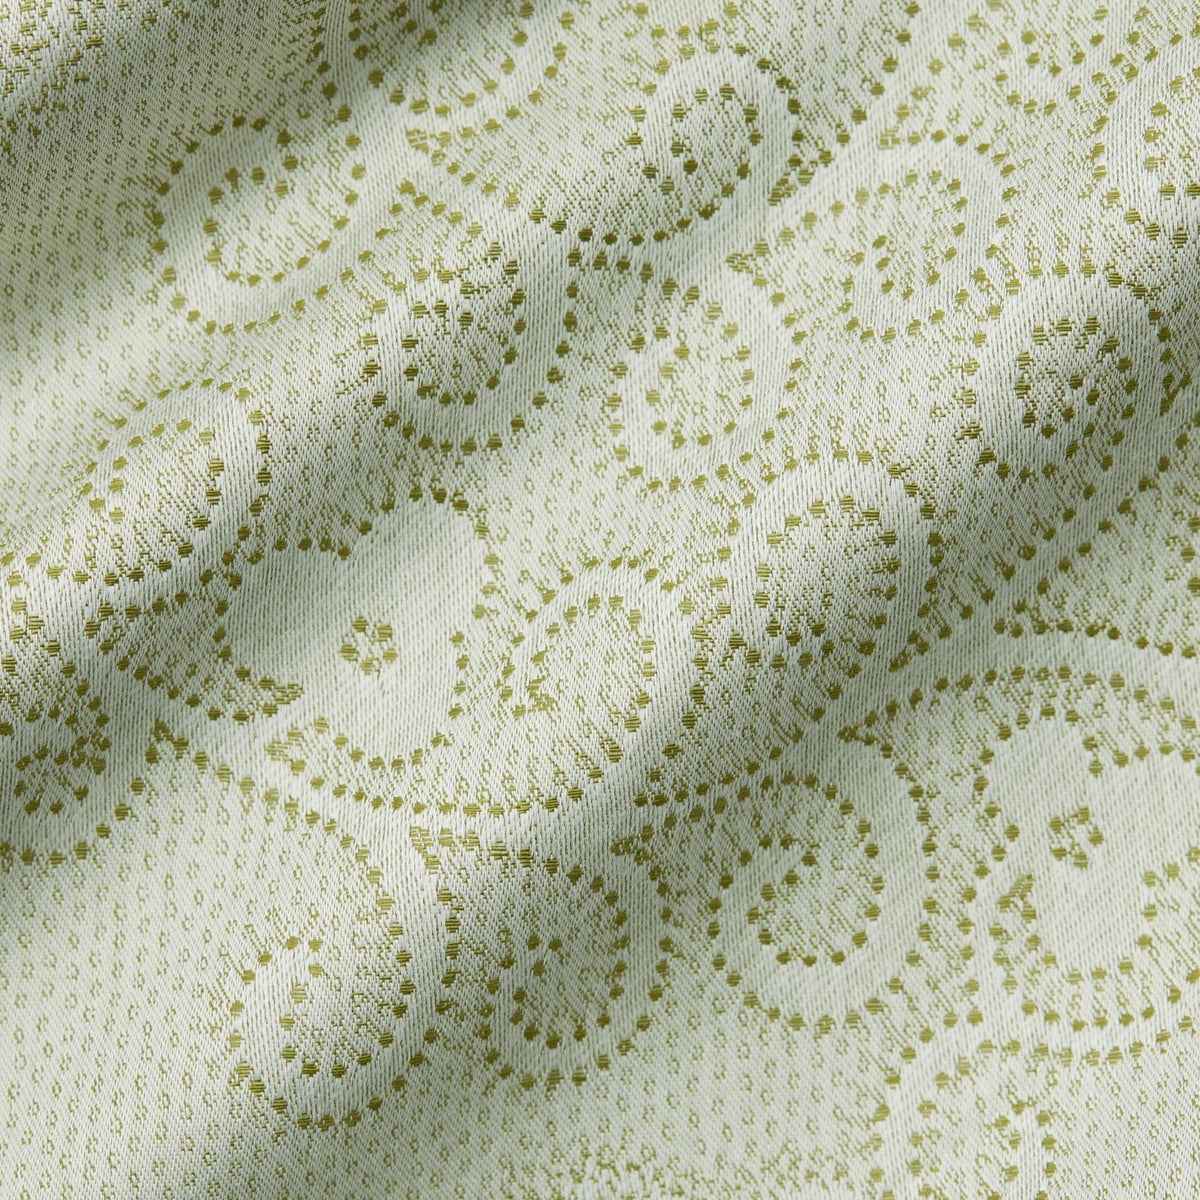 Swatch Sample of Sferra Rialto Bedding in Willow Color